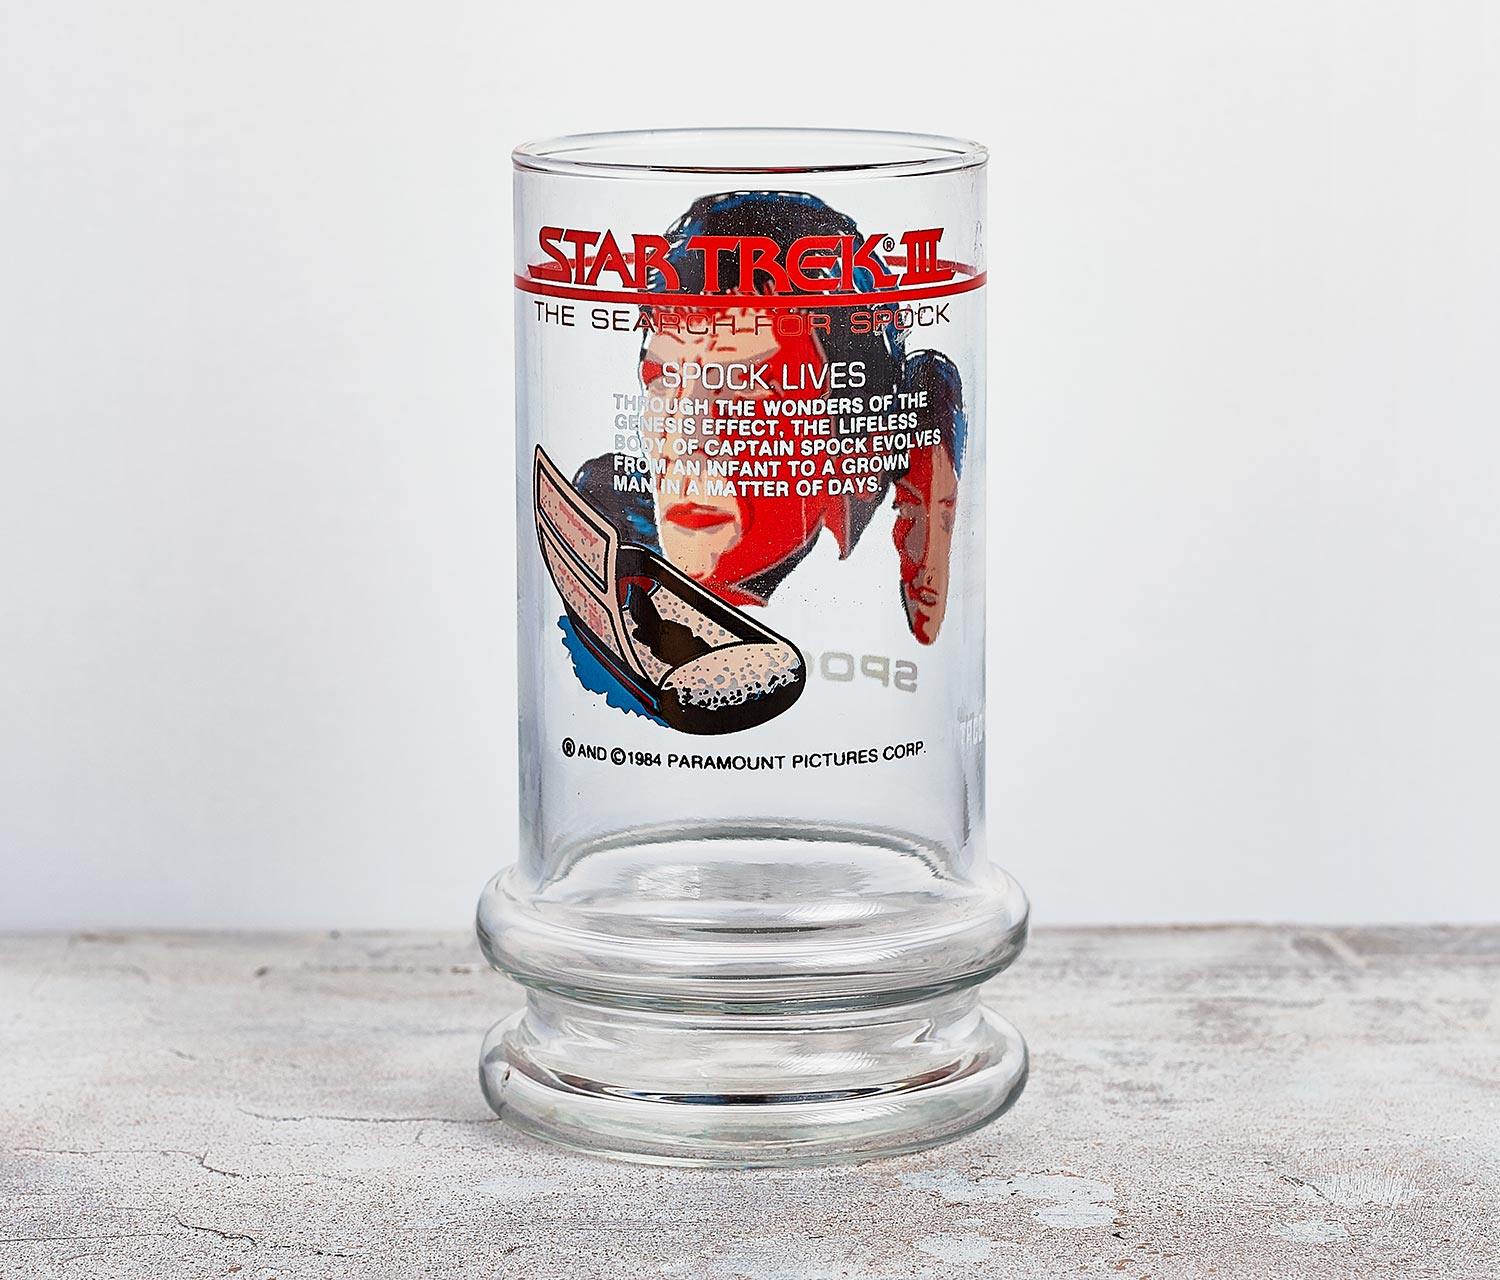 Star Wars Shot Glass Vintage Glassware